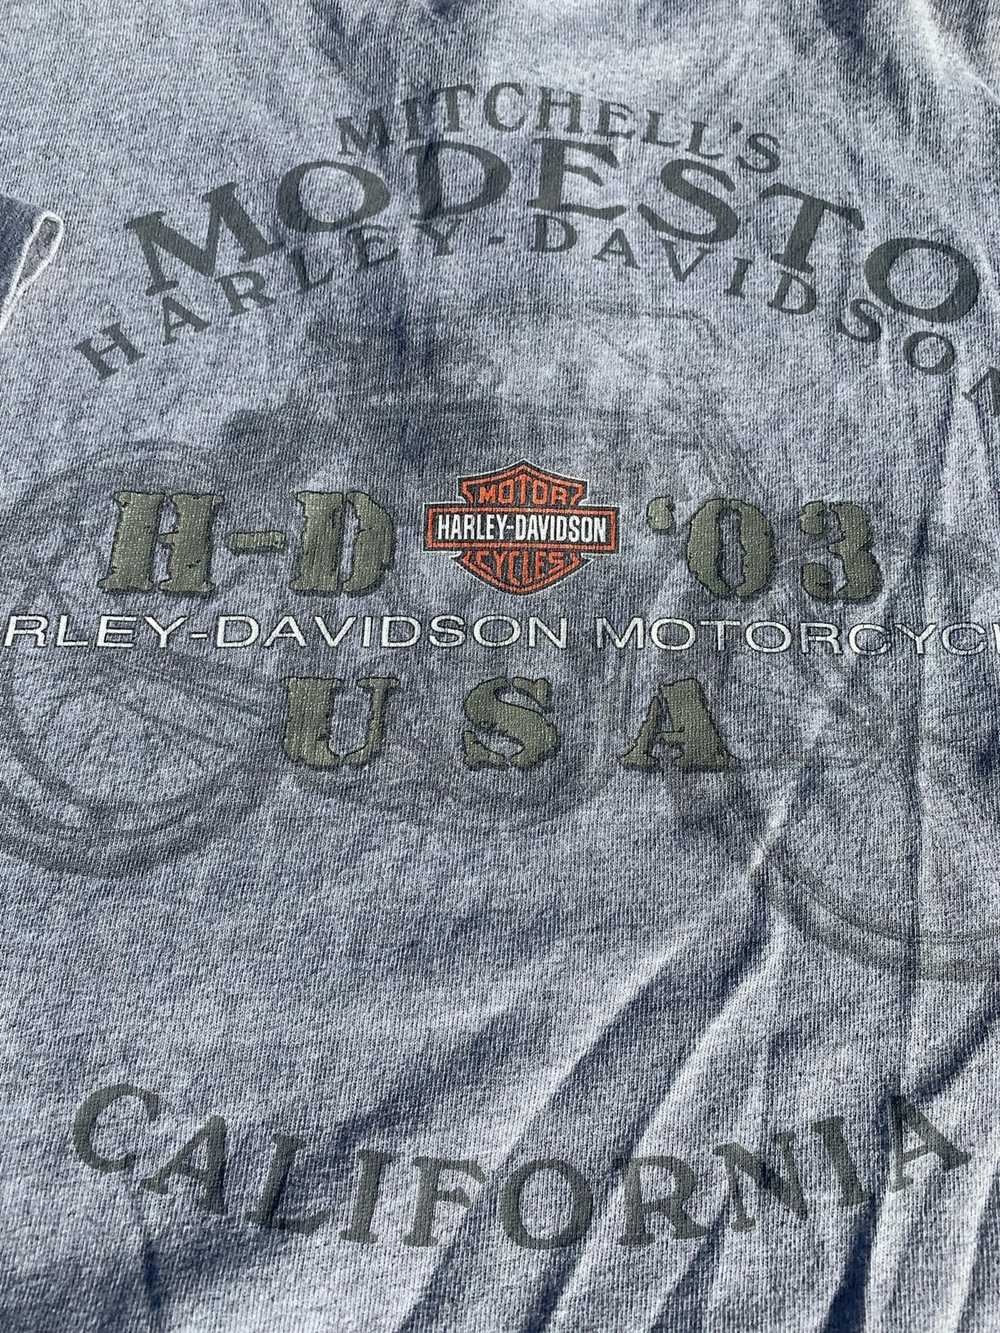 Harley Davidson 2003 100th anniversary Harley Dav… - image 6